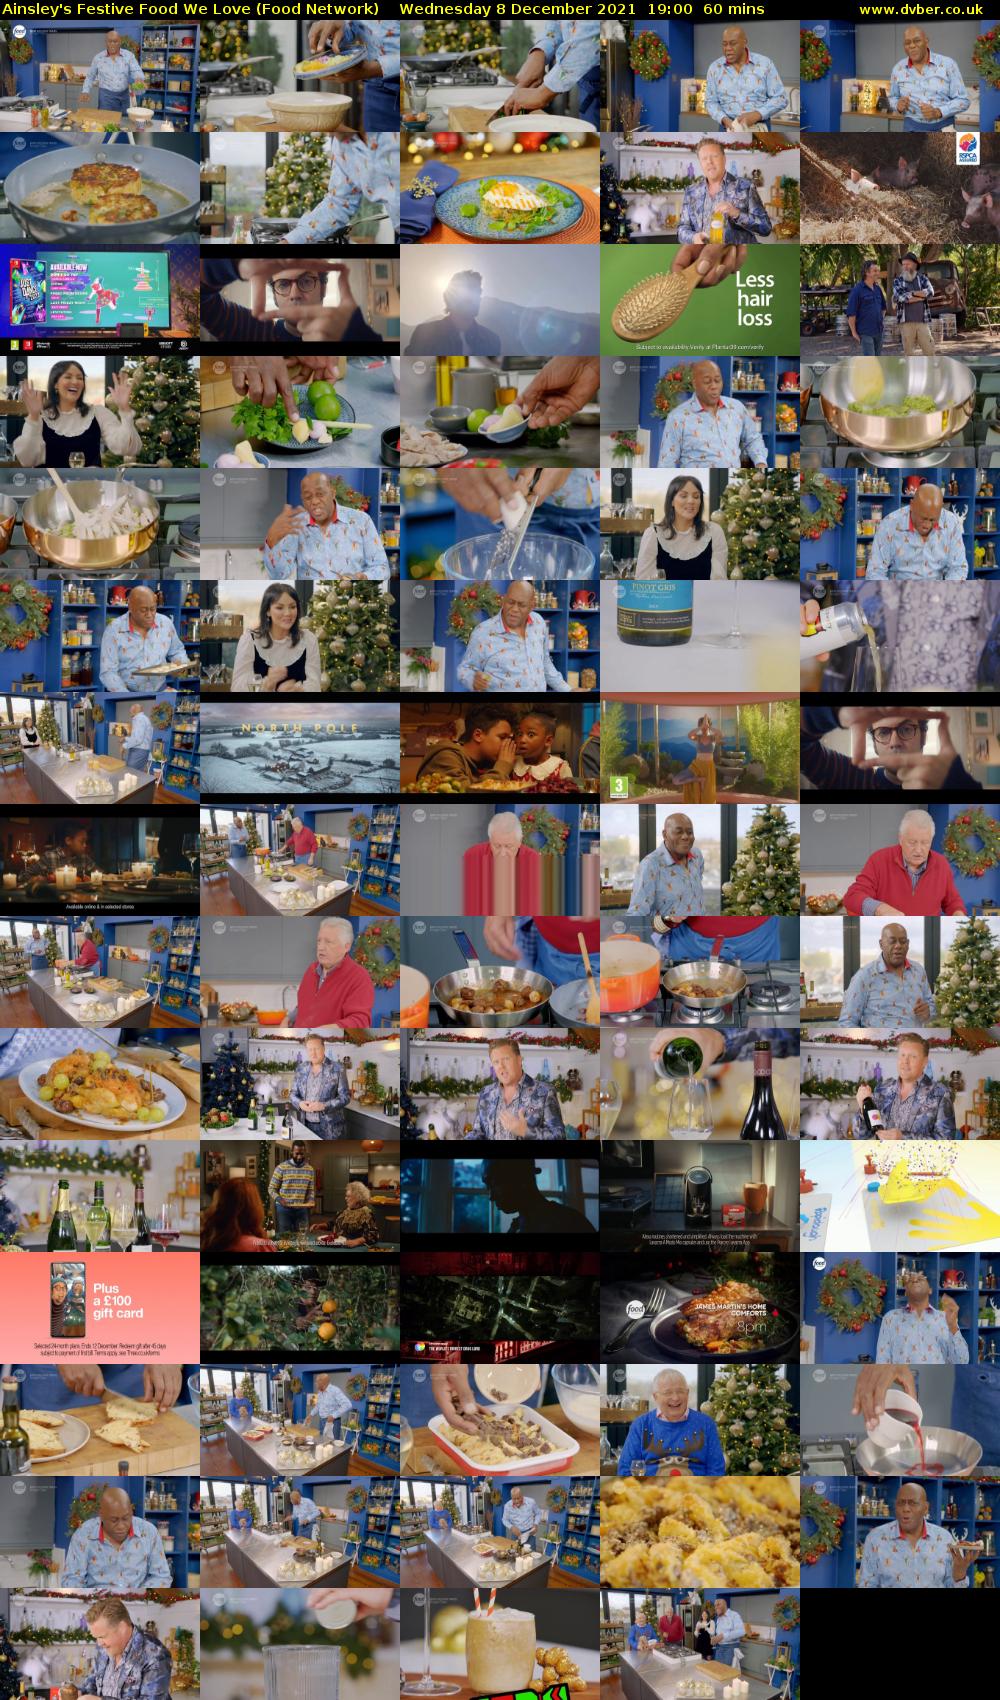 Ainsley's Festive Food We Love (Food Network) Wednesday 8 December 2021 19:00 - 20:00